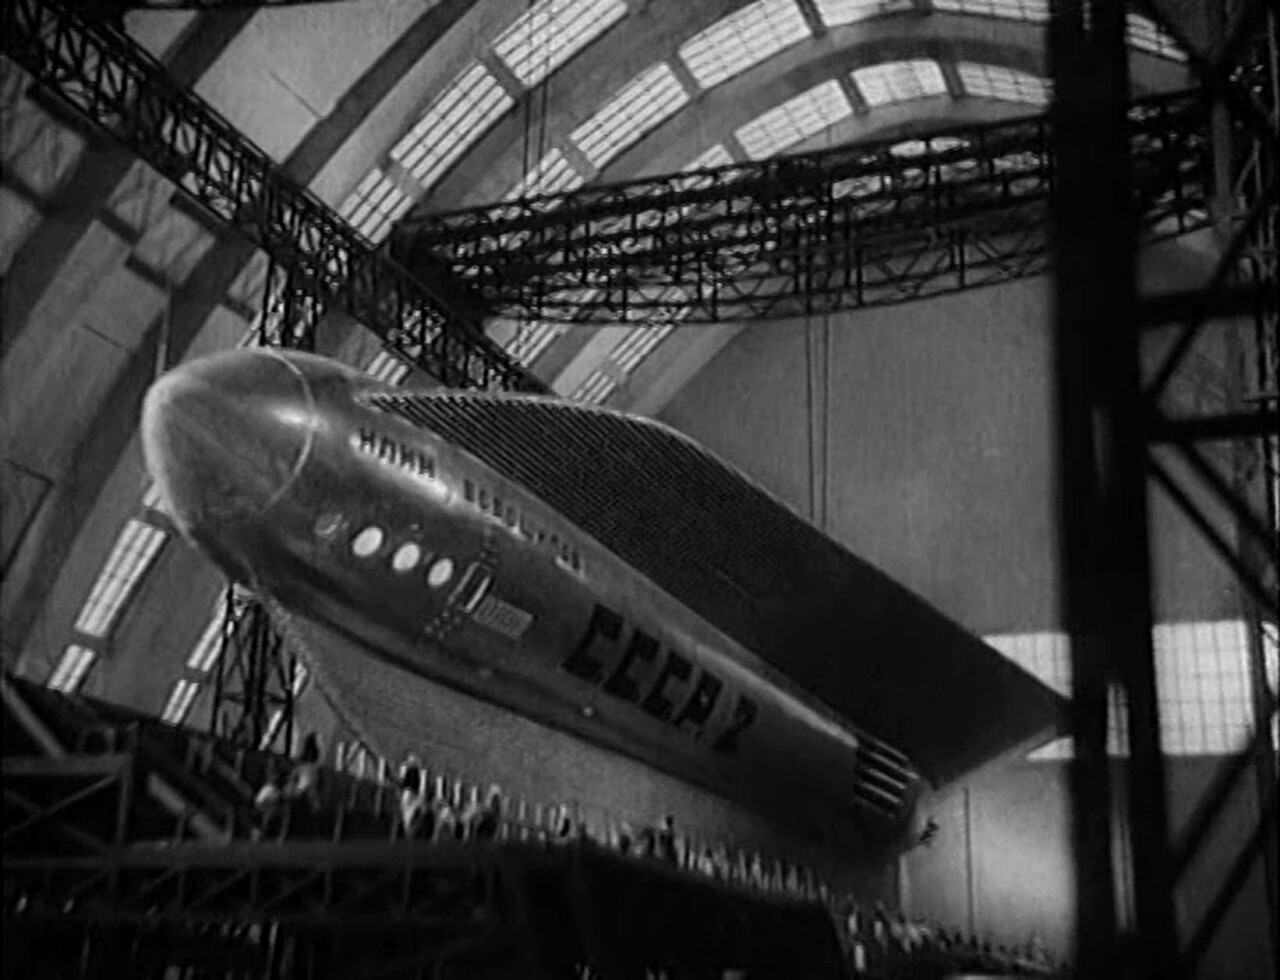 The moon rocket in its hangar in Cosmic Voyage (1936)